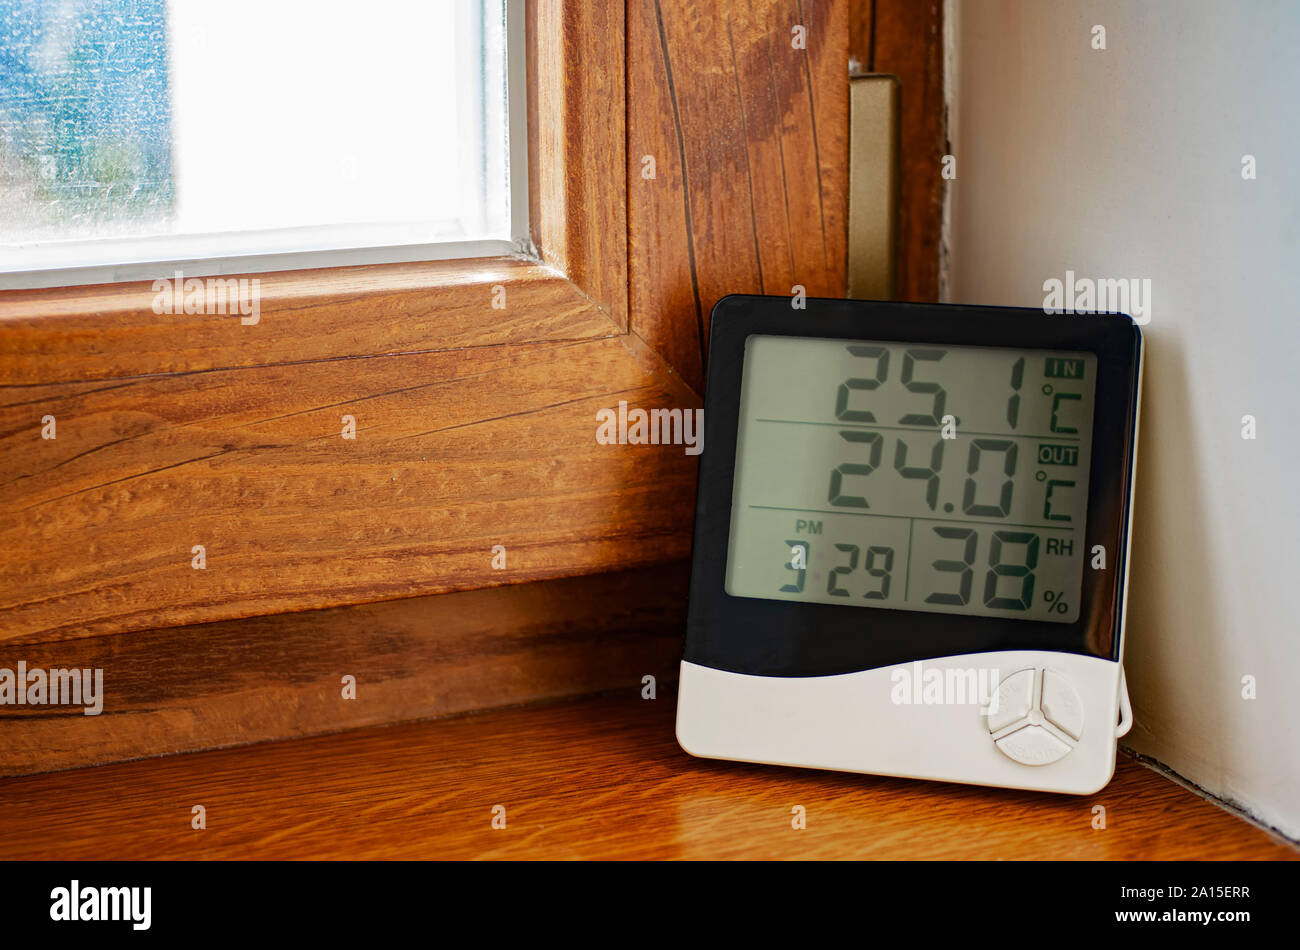 https://c8.alamy.com/comp/2A15ERR/home-weather-station-digital-indoor-temperature-and-humidity-sensor-2A15ERR.jpg